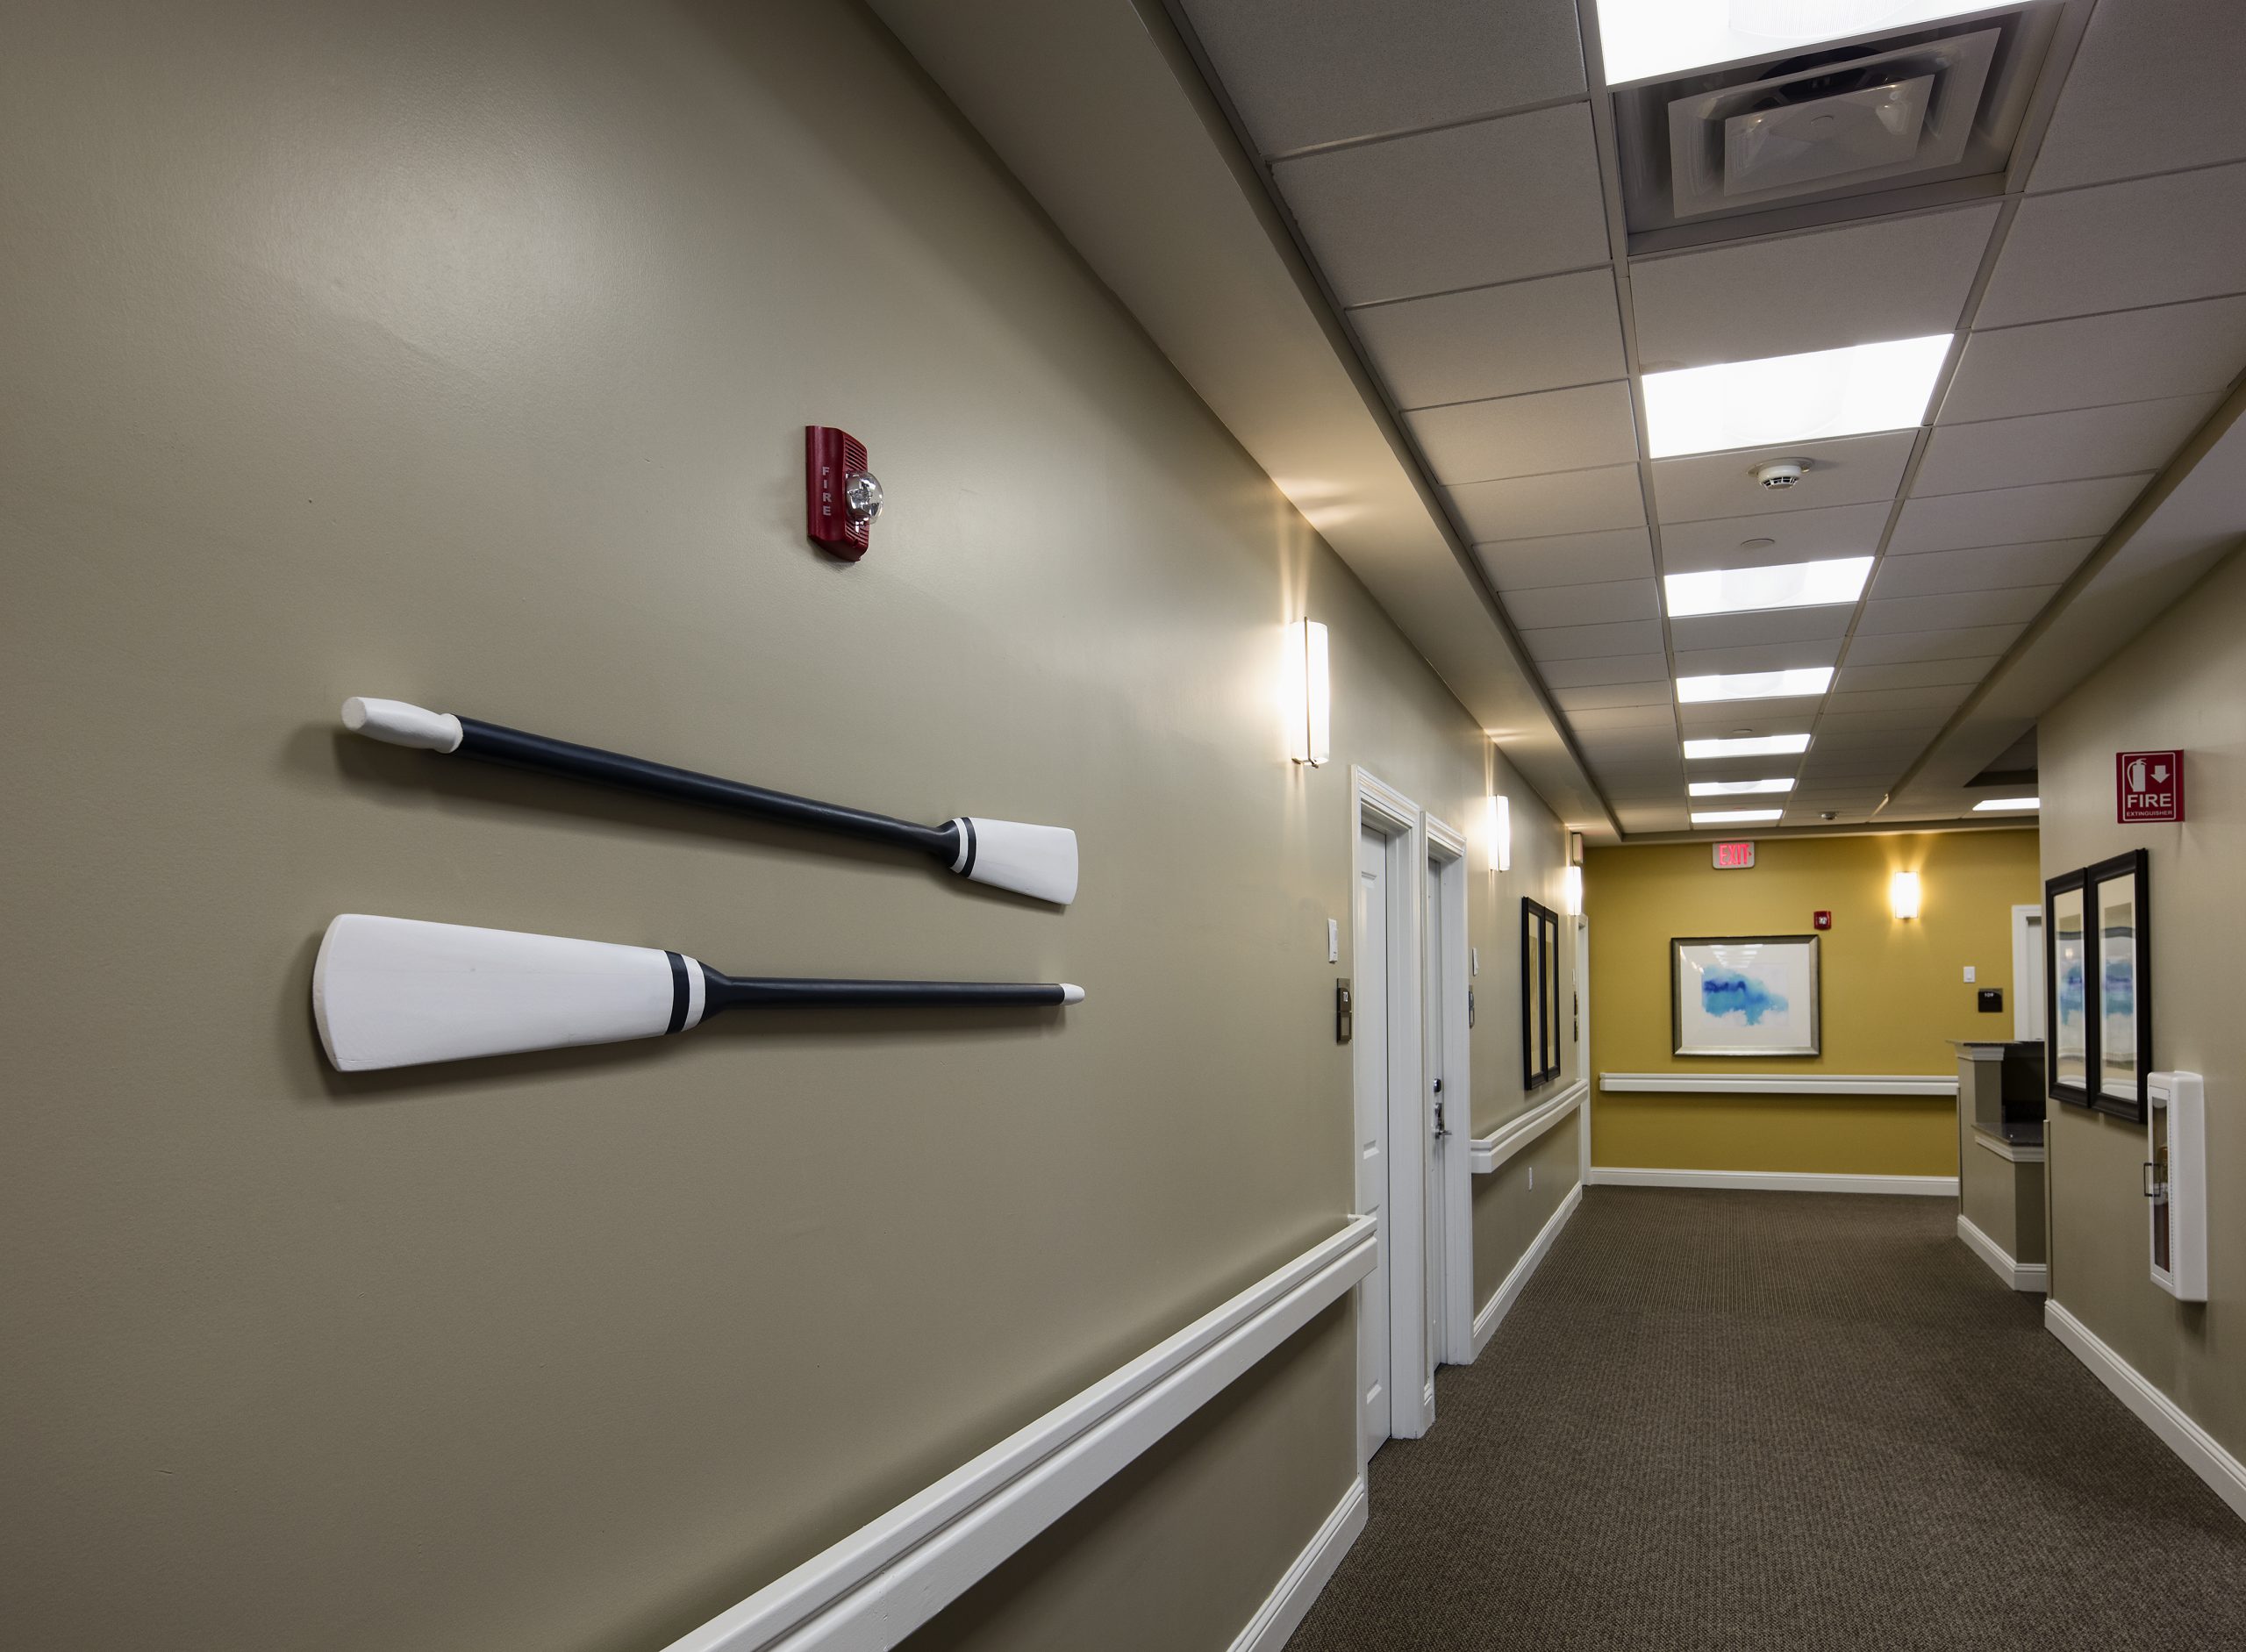 Hallway with decorative oars